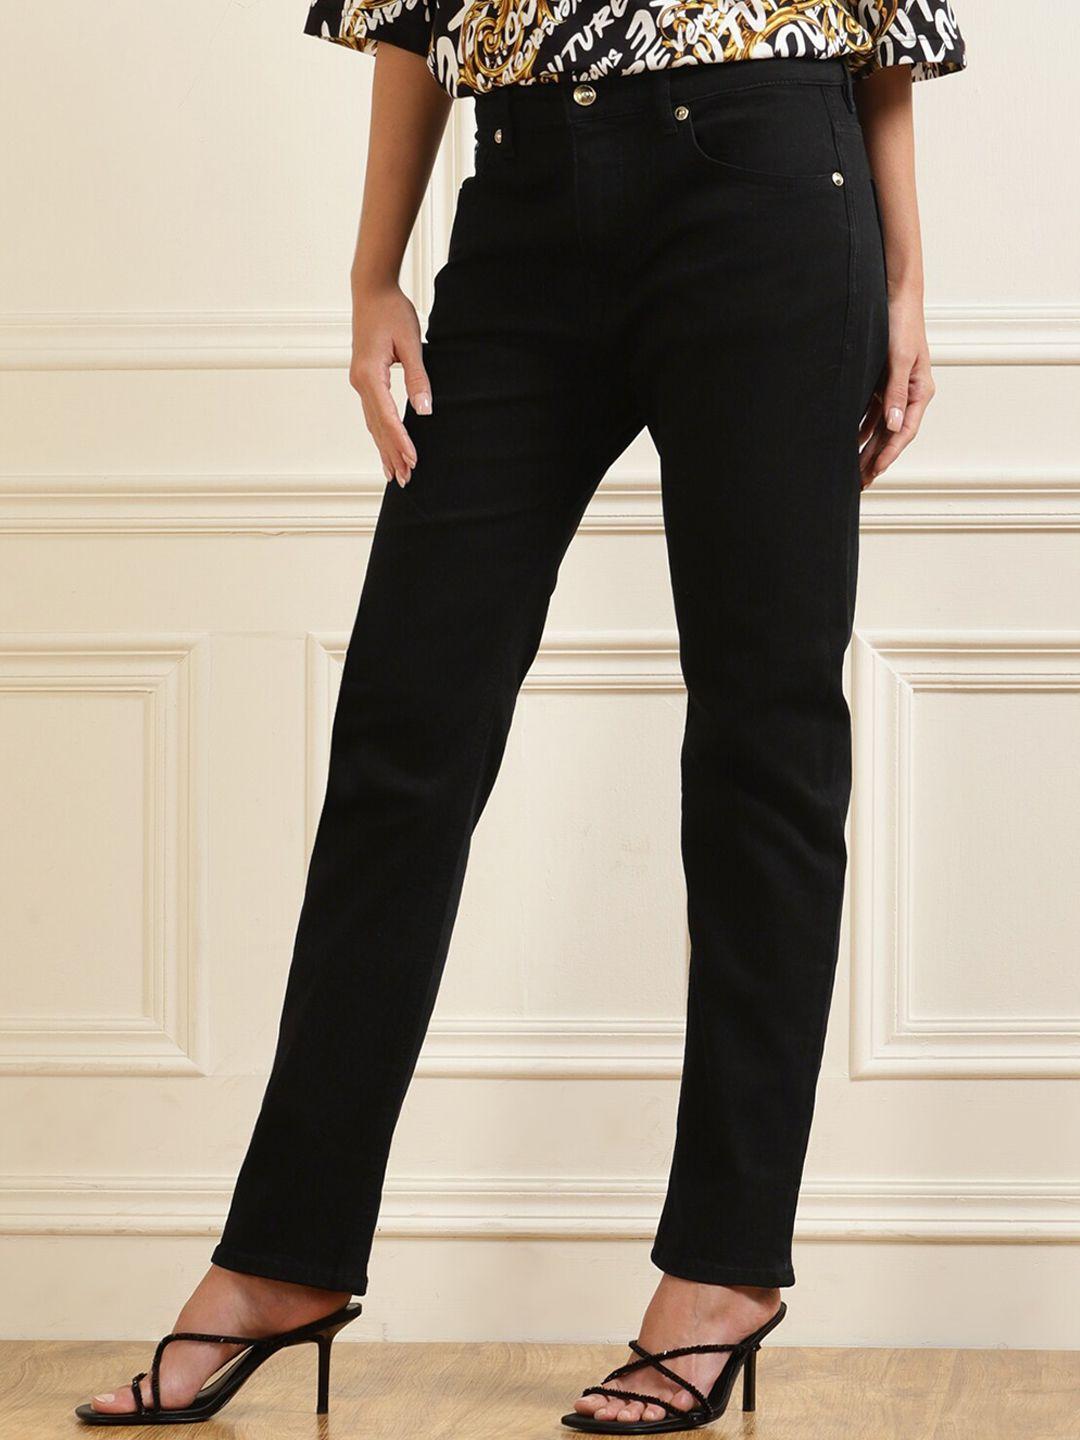 versace jeans couture women black jeans